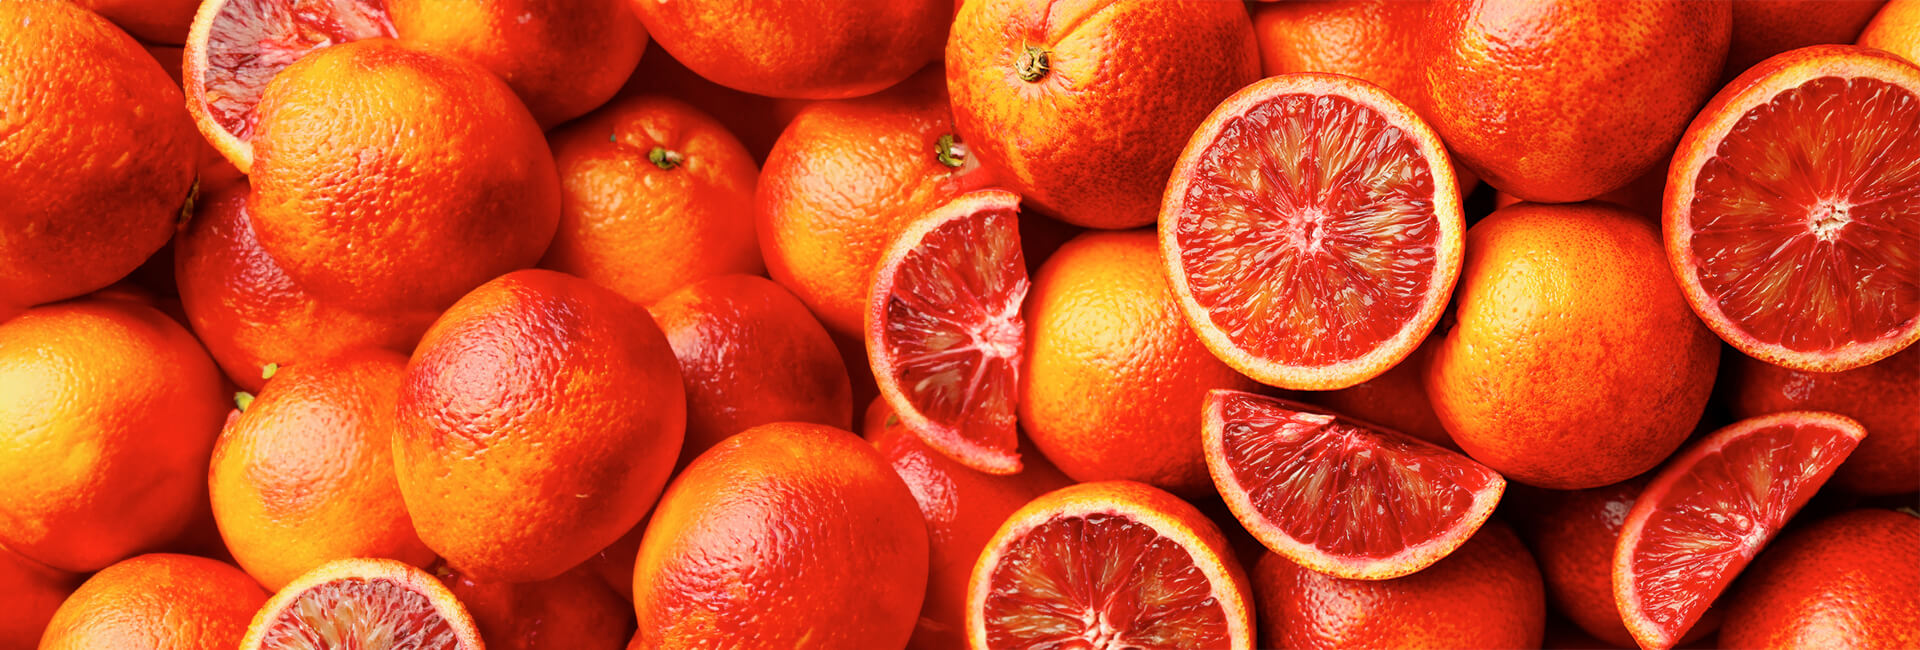 Sagra dell’arancia rossa